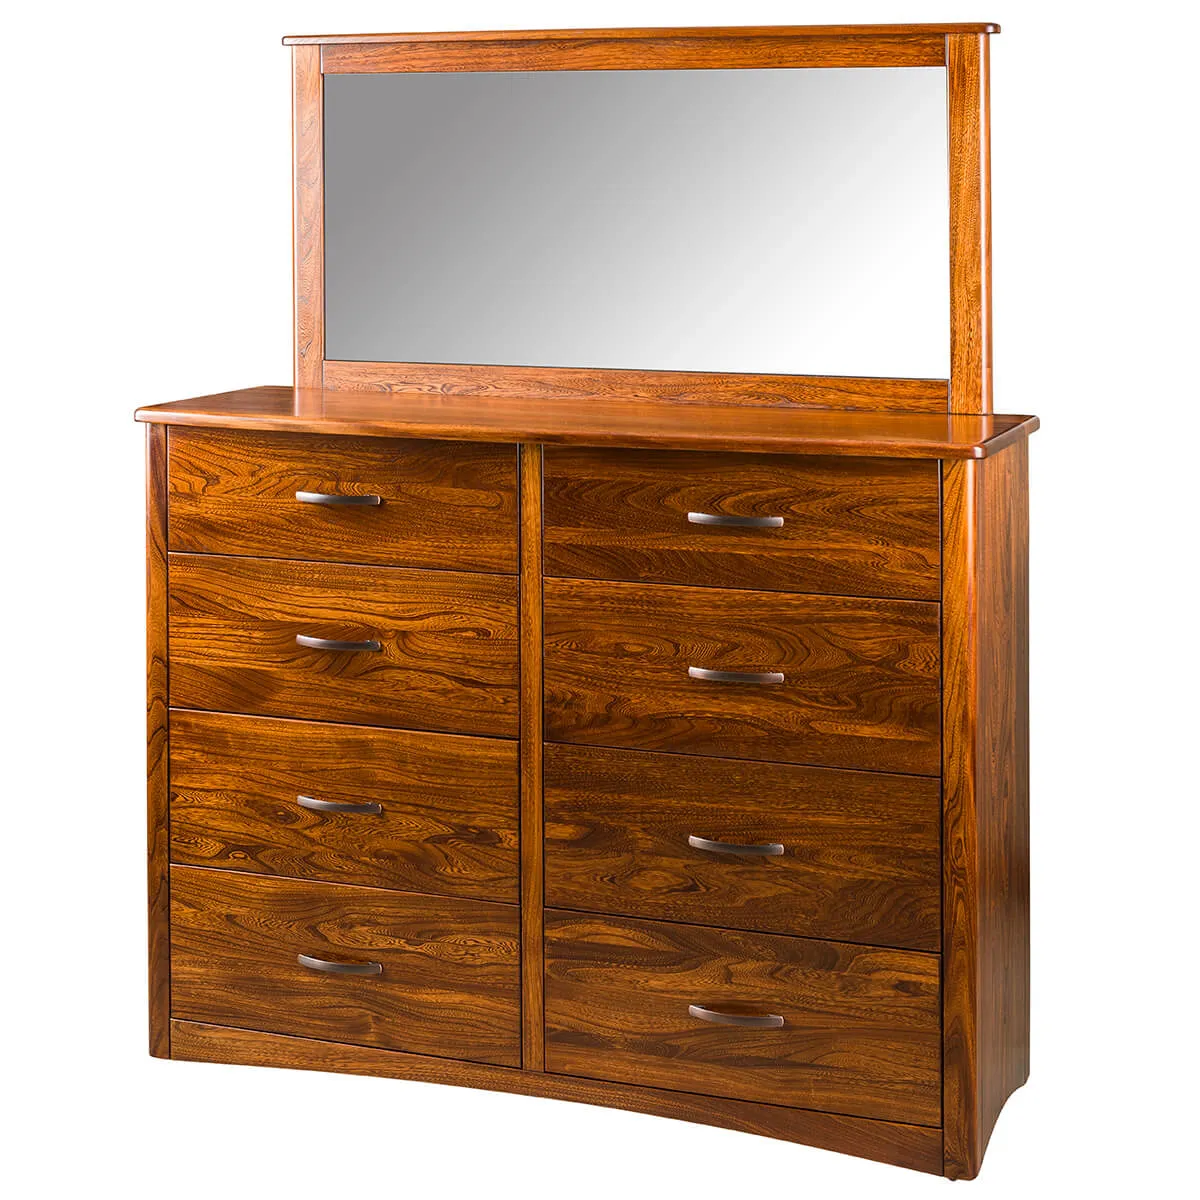 Carrington 60 inch Wide Dresser with Landscape Mirror